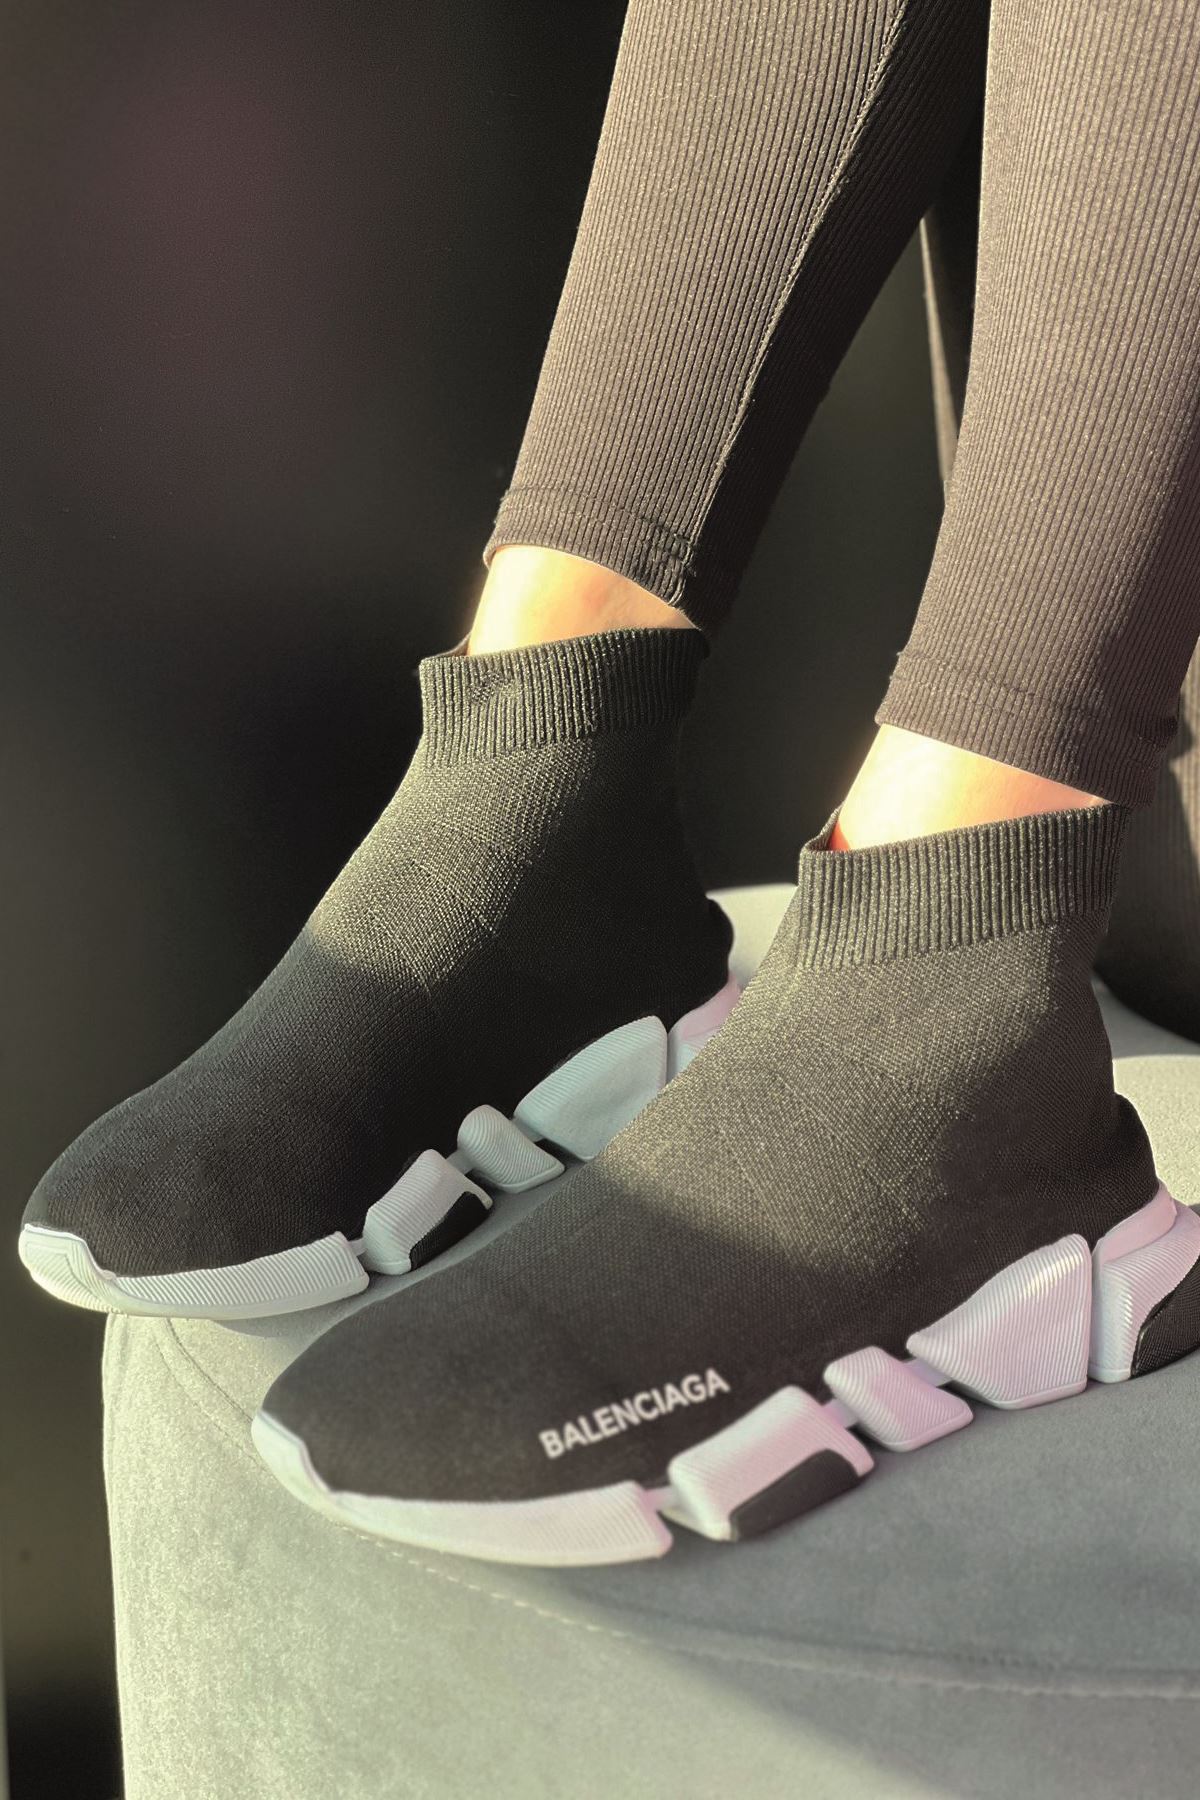 Balenciaga Siyah Çorap Ayakkabı 